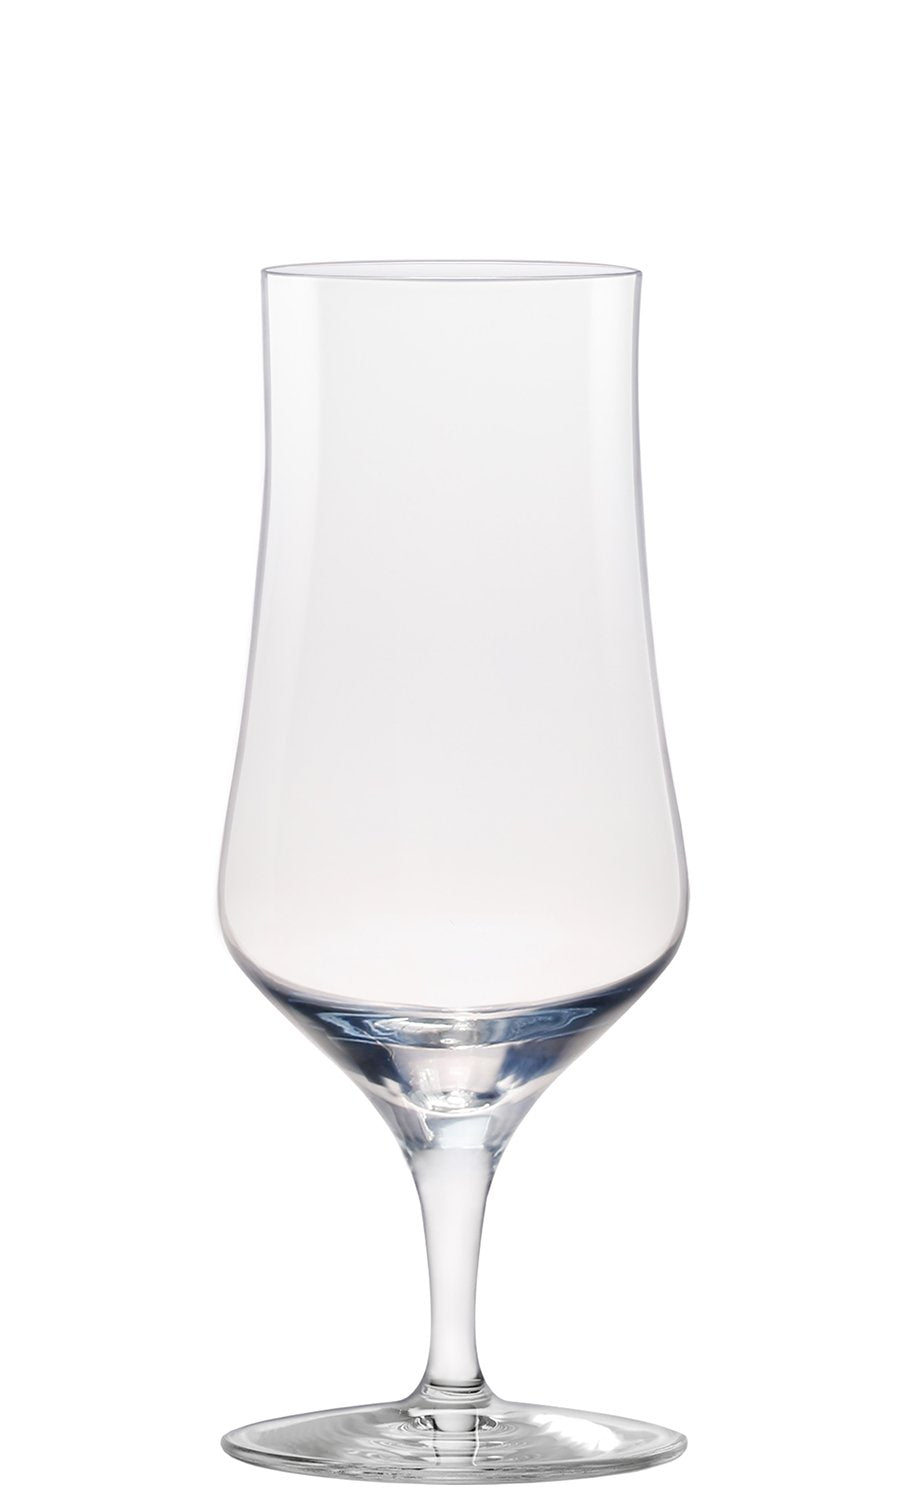 Stoelzle® Beer Glass 0.3L (set of 6)